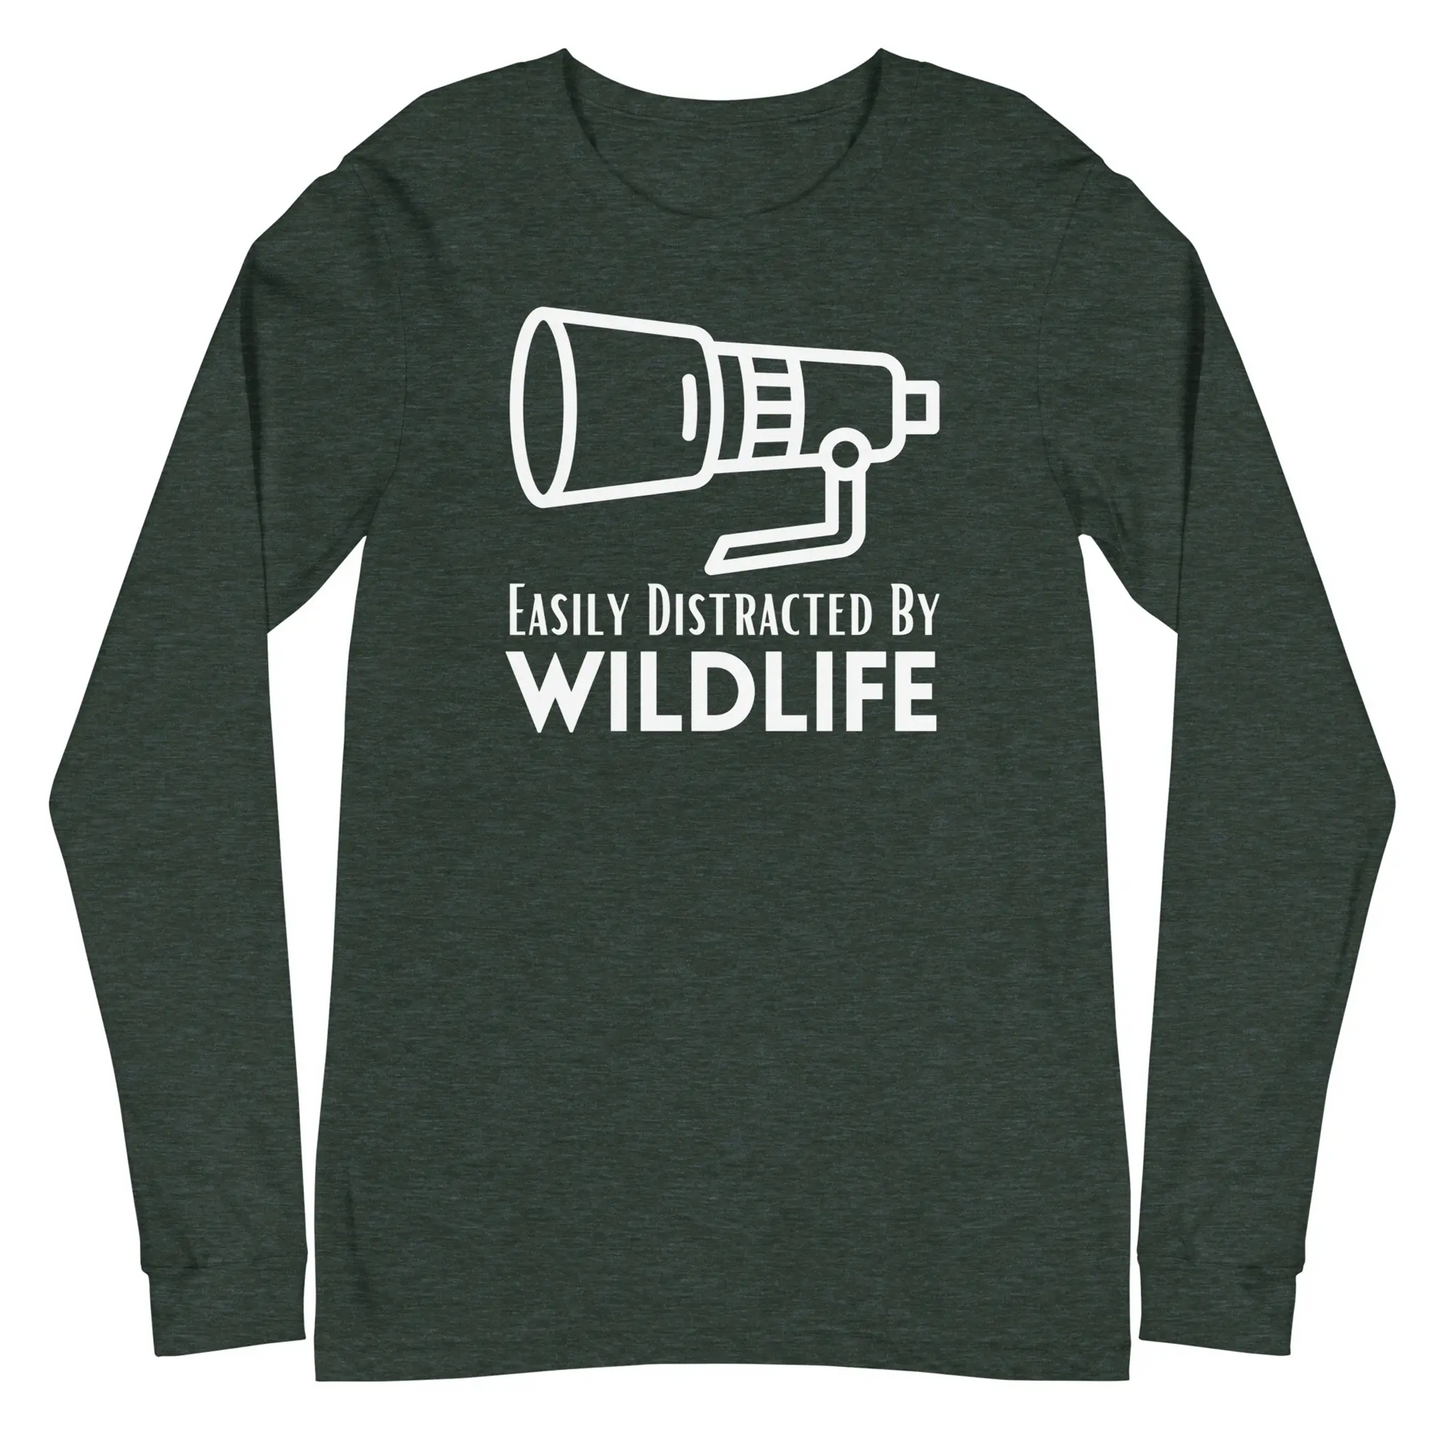 Green Wildlife Photographer Long Sleeve Shirt.